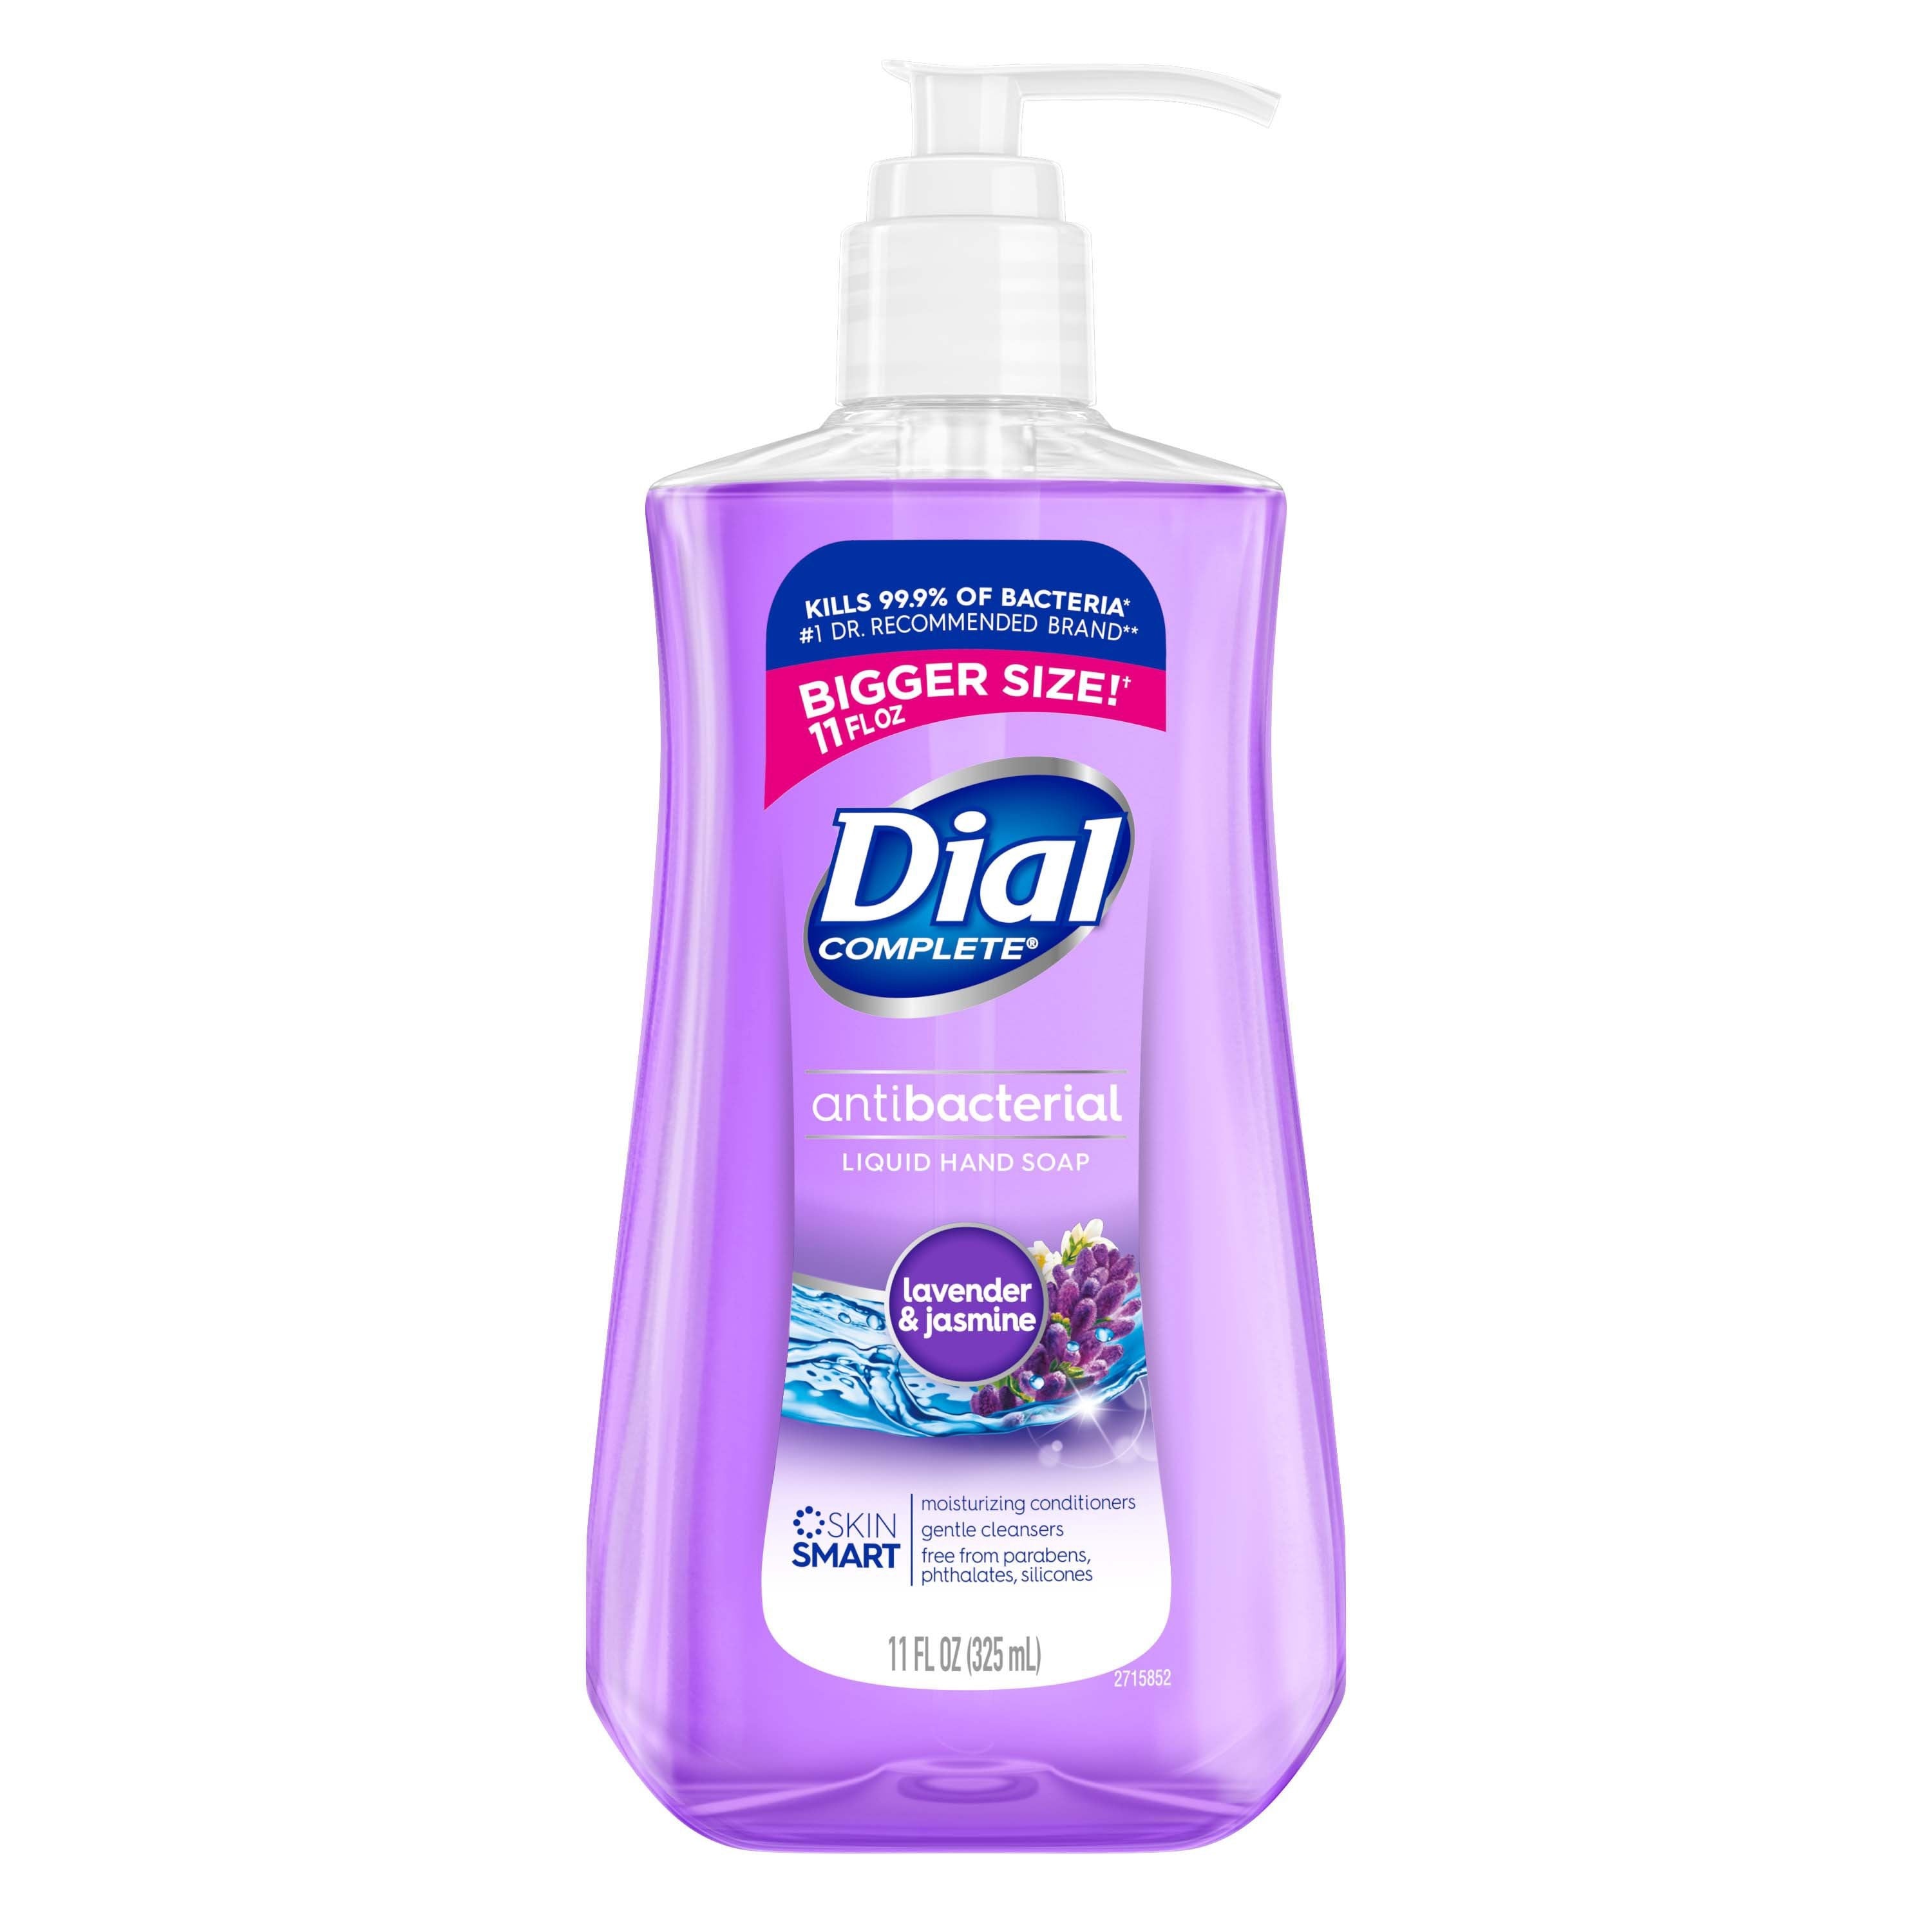 Dial Complete Antibacterial Liquid Hand Soap Lavender & Jasmine - 11oz/12pk